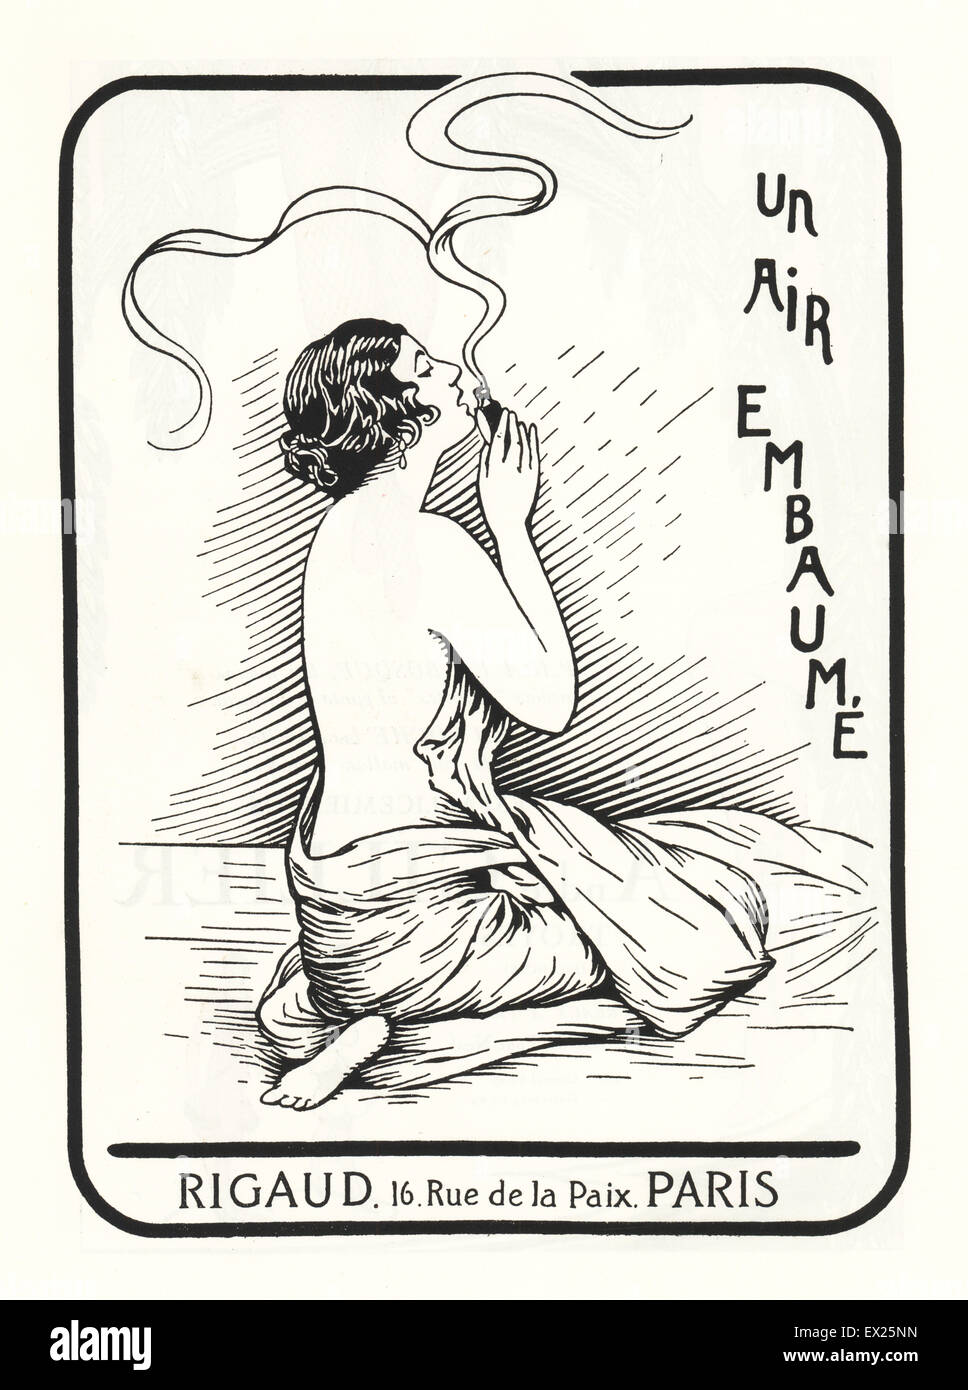 Werbung für den Duft Un Air Embaume der Parfümeur Jean-Baptiste Rigaud. Lithographie aus der Luxus Mode Magazin Art Gicht Beaute, ABG, Paris, April 1926. Stockfoto